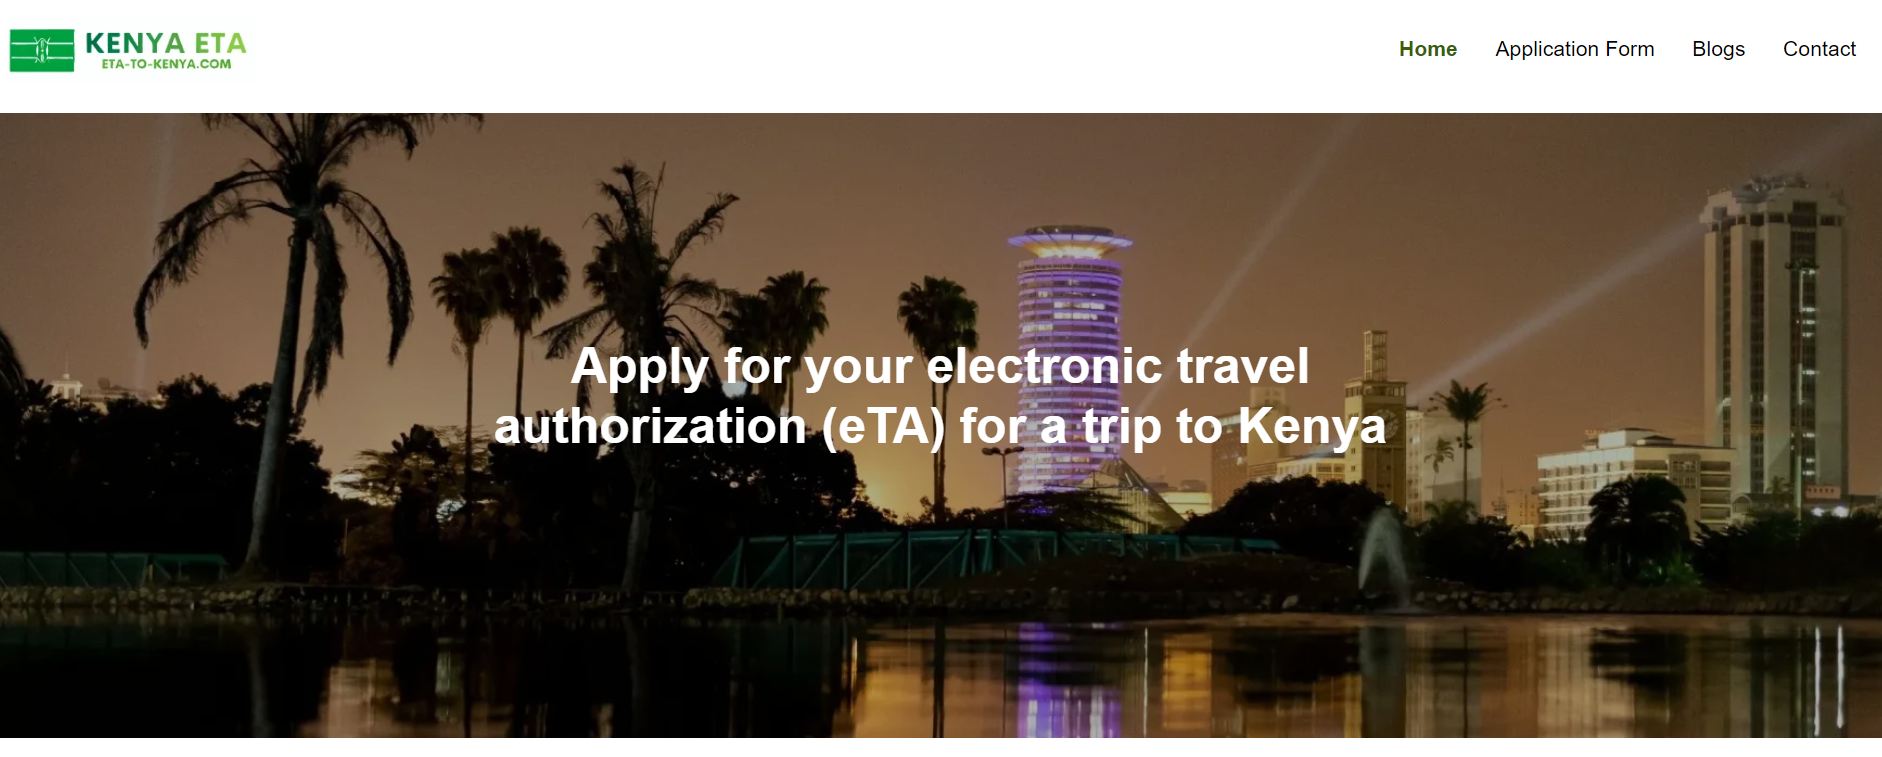 apply-for-your-electronic-travel-authorization-eta